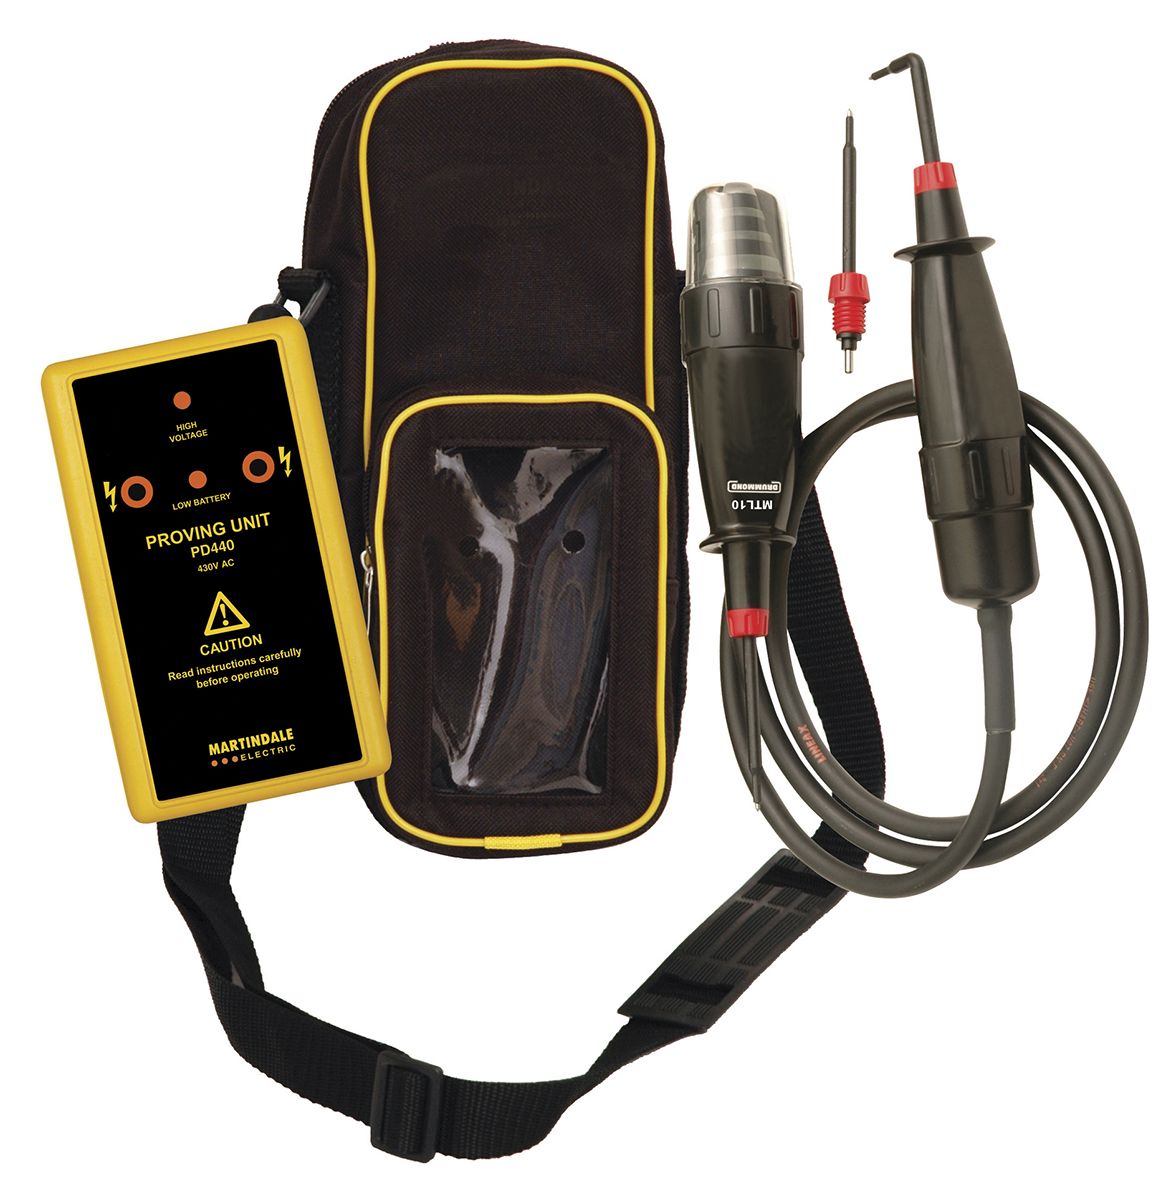 John Drummond MTL10 Voltage Indicator & Proving Unit Kit 3.5mA 50 V ac/dc, 100 V ac/dc, 200 V ac/dc, 400 V ac/dc, Kit